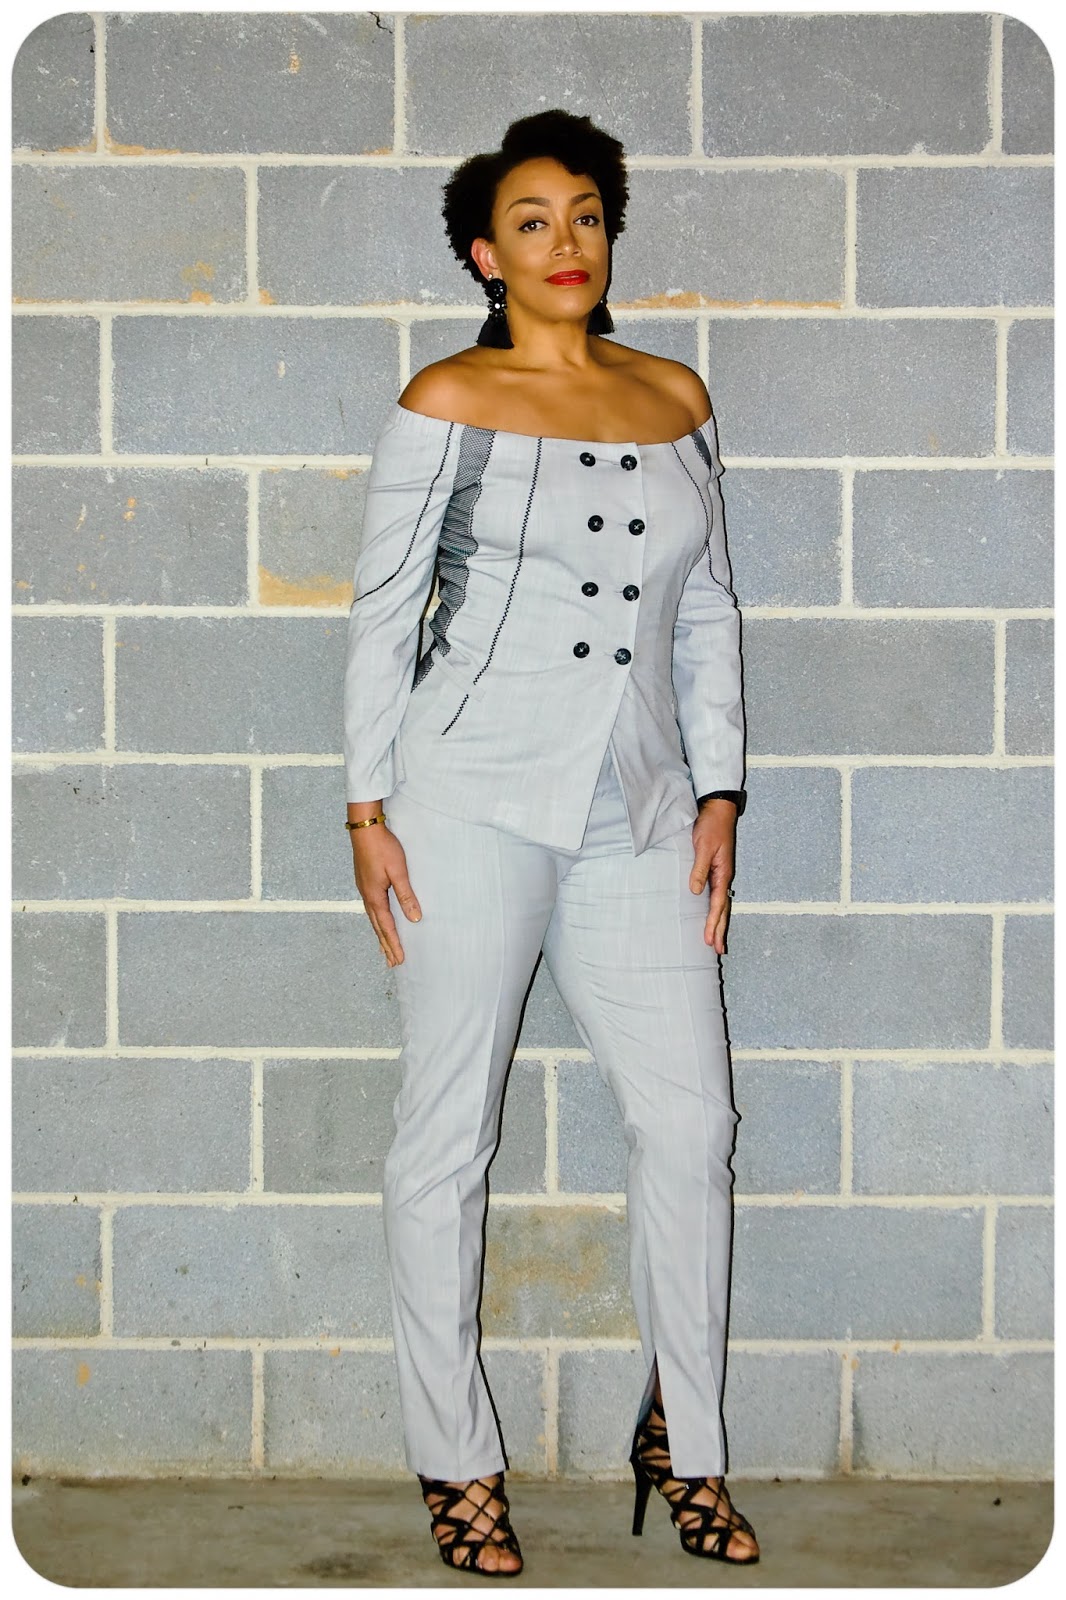 Vogue Patterns 2893 Jacket and DP Studio LE302 Pants -- Erica Bunker DIY Style!